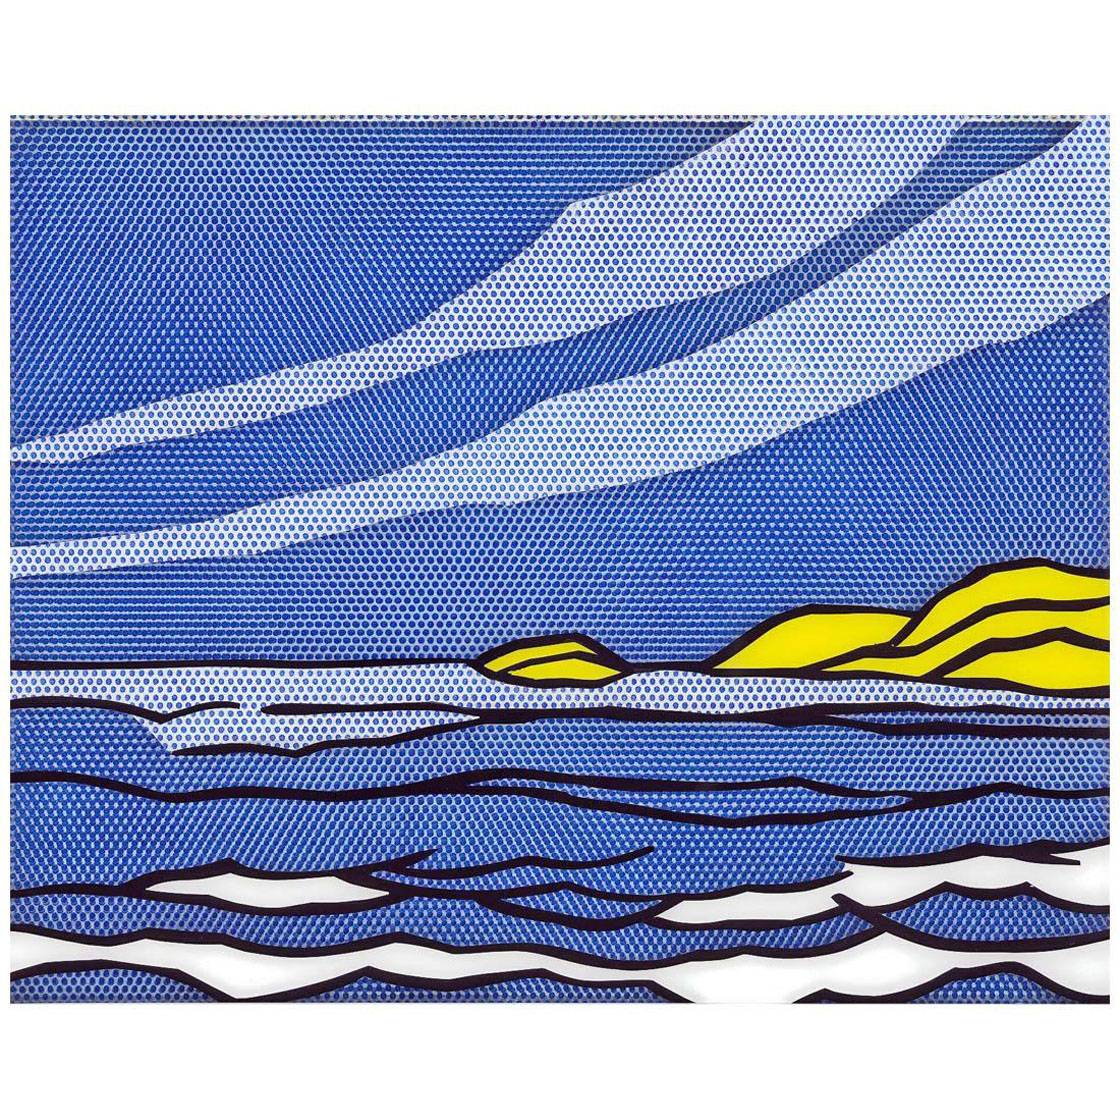 Roy Lichtenstein. Sea Shore. 1964. Whitney Museum NY